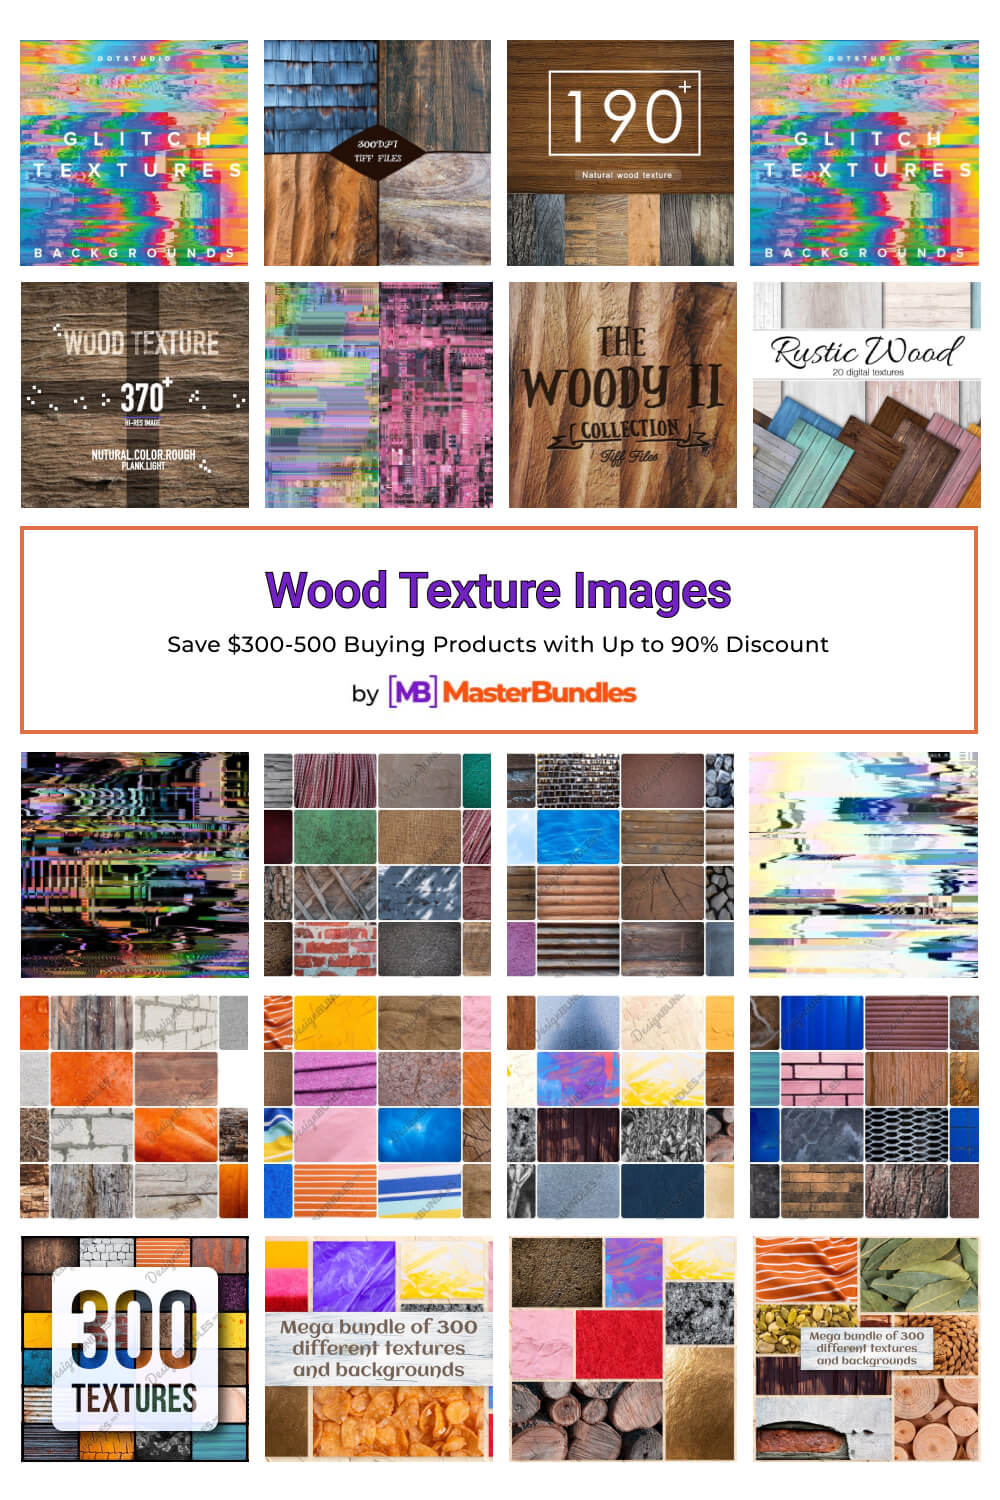 wood texture images pinterest image.